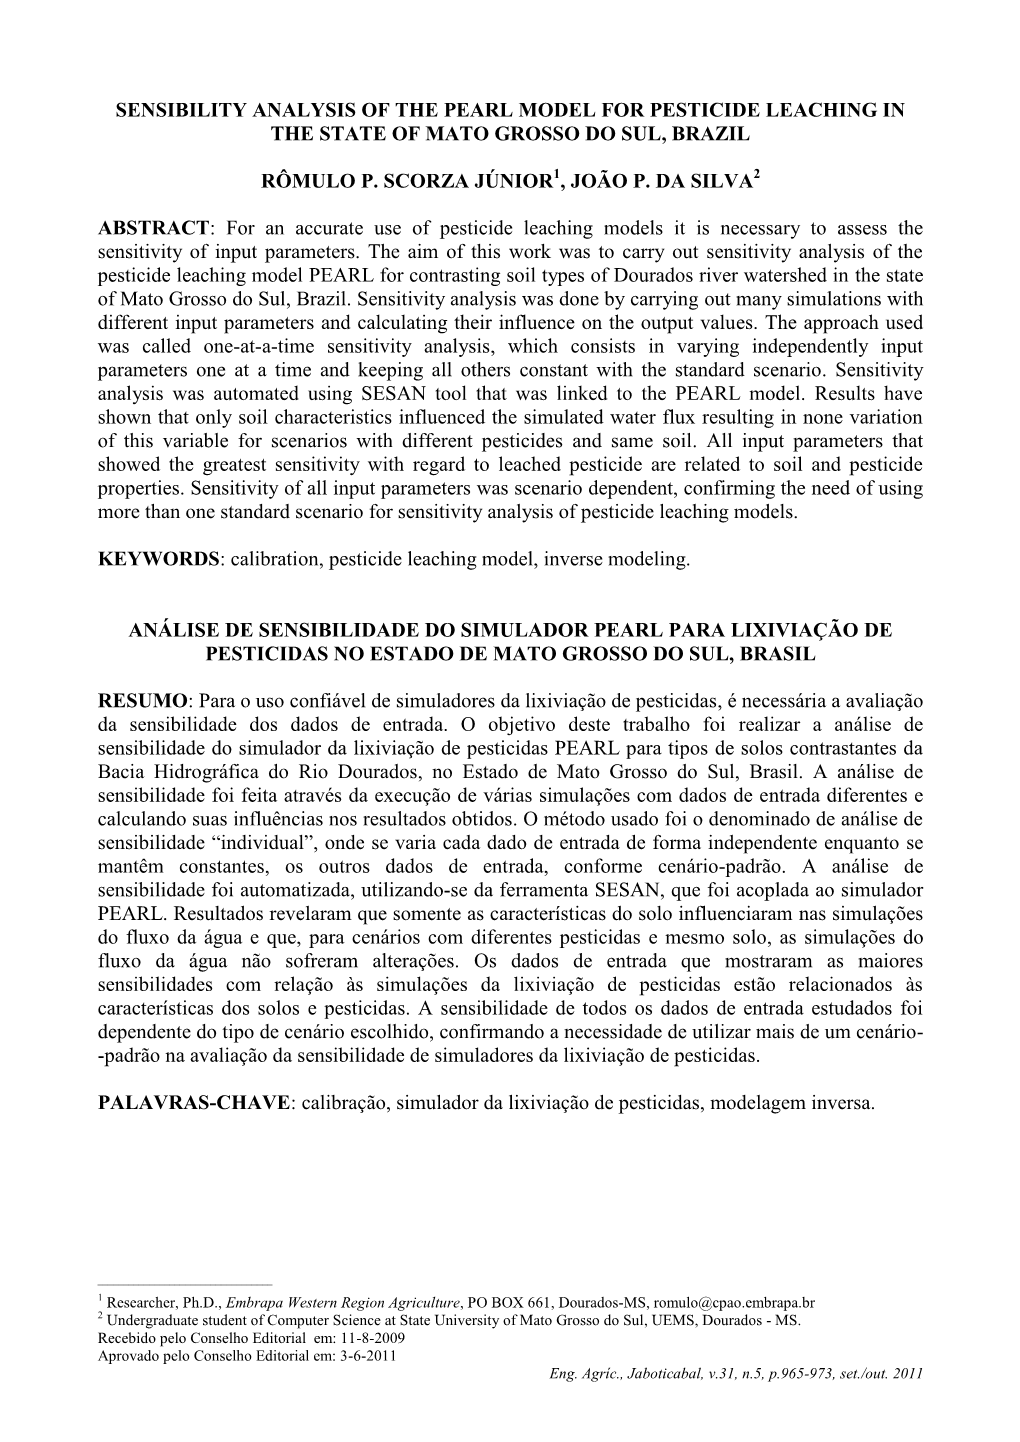 Sensibility Analysis of the Pearl Model for Pesticide Leaching in Mato Grosso Do Sul State, Brazil